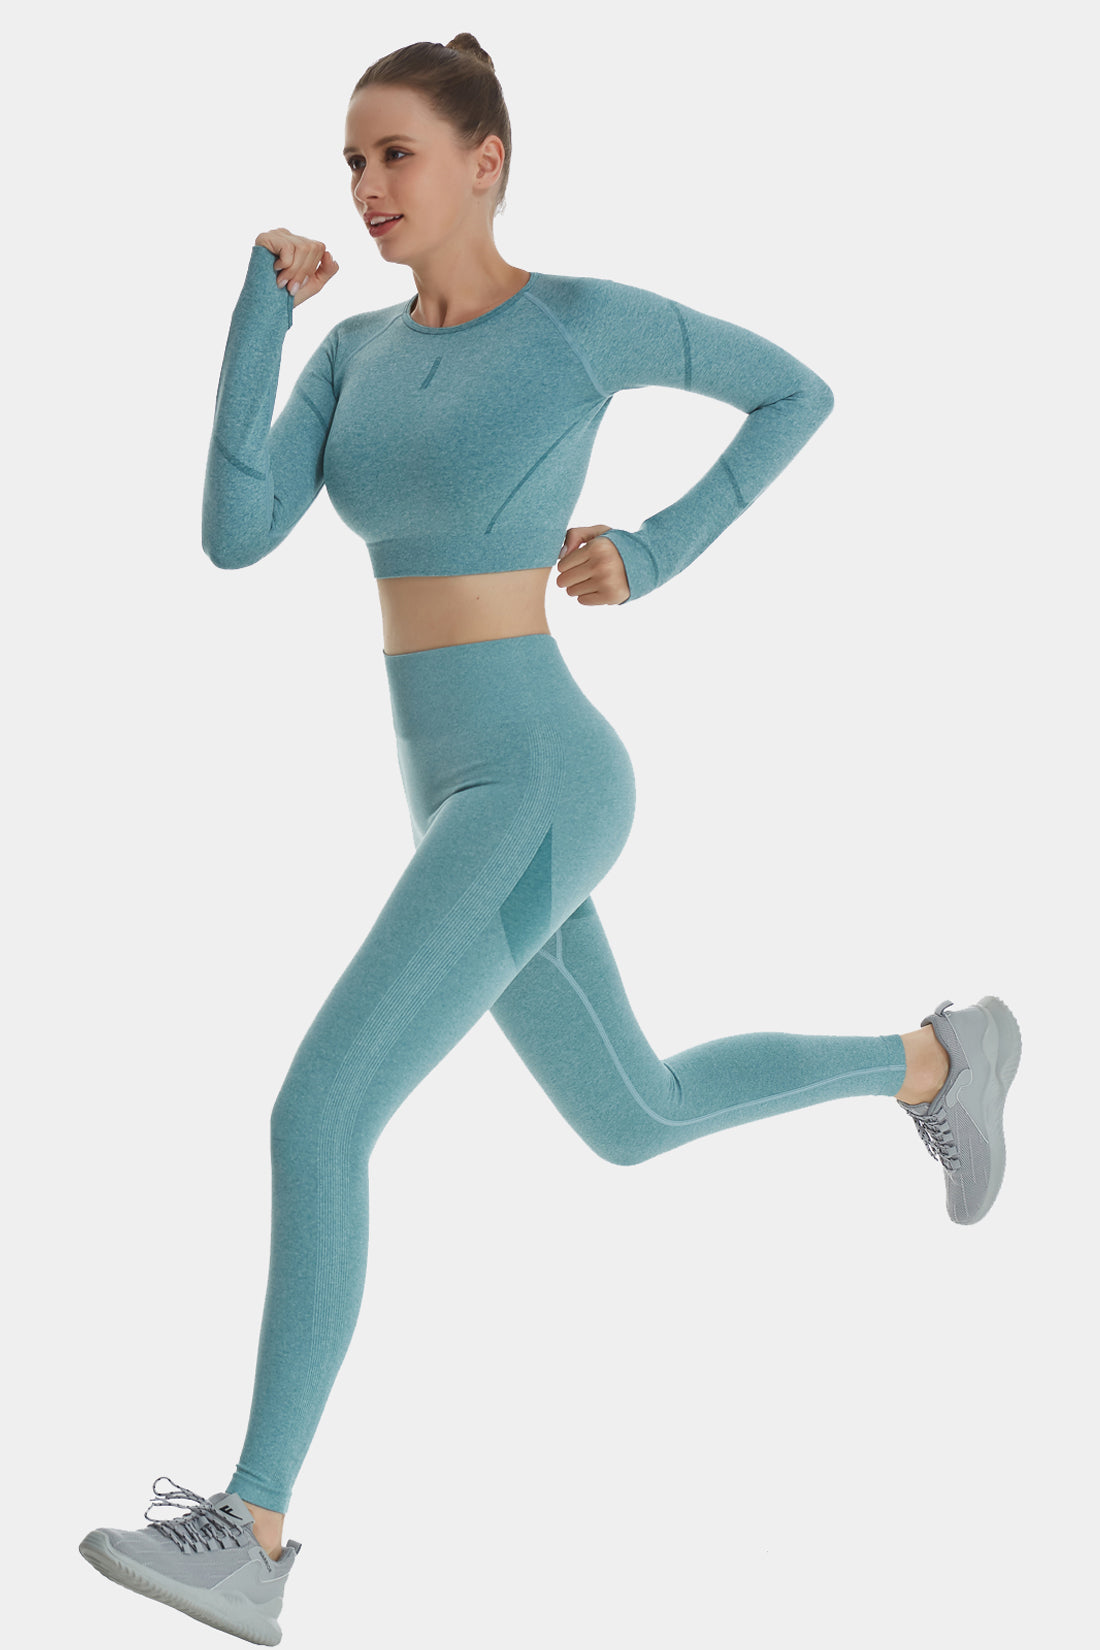 SCACTO® 3PCS Yoga Set Seamless Sport Set Women Gym Clothing Leggings Women  Crop Top Sports Br…